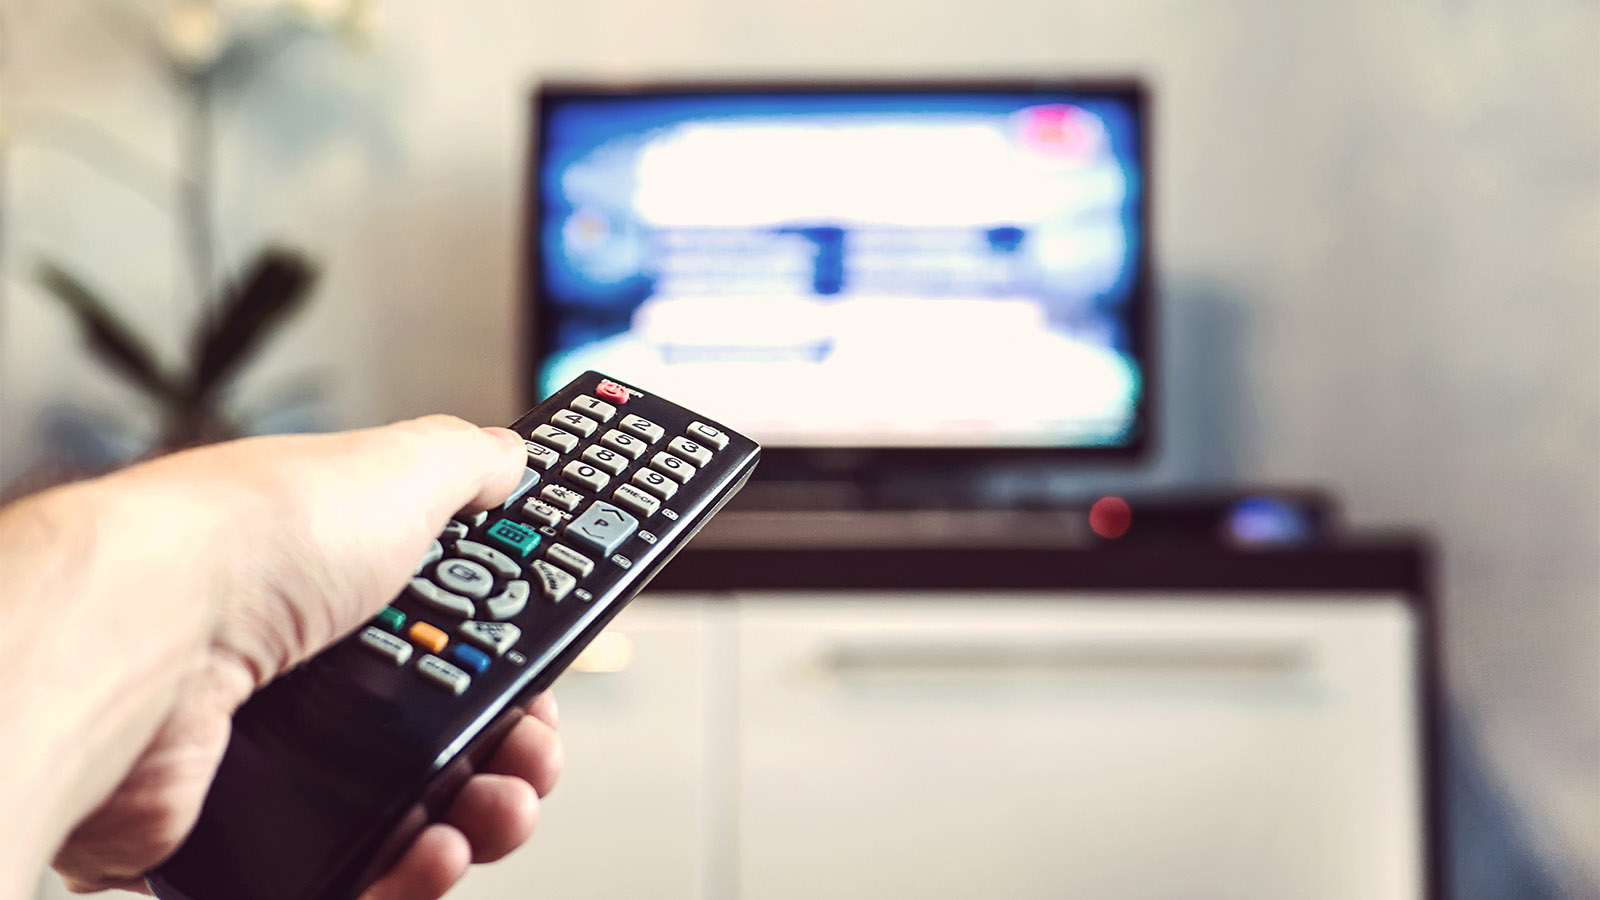 שלט טלוויזיה (צילום אילוסטרציה: Shutterstock)